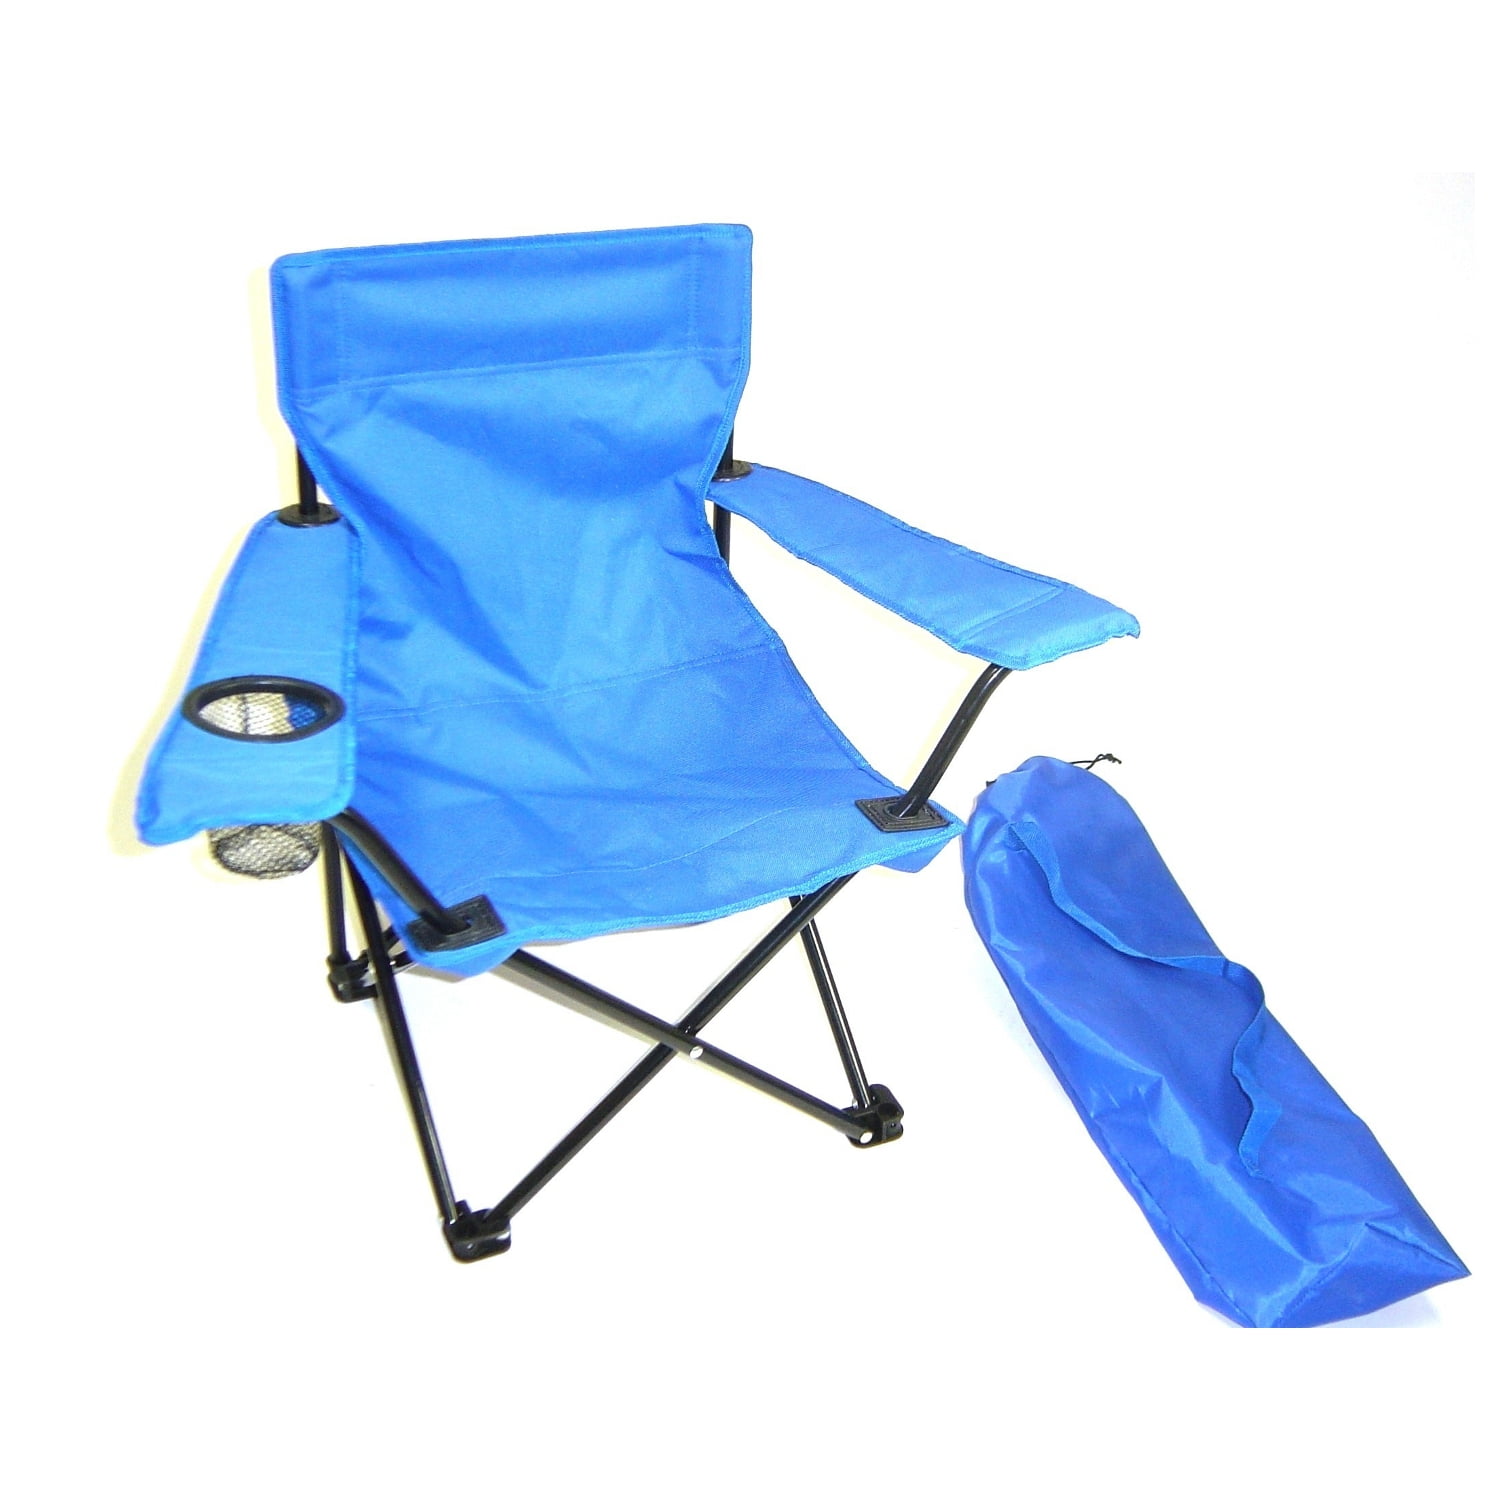 kmart kids camping chair